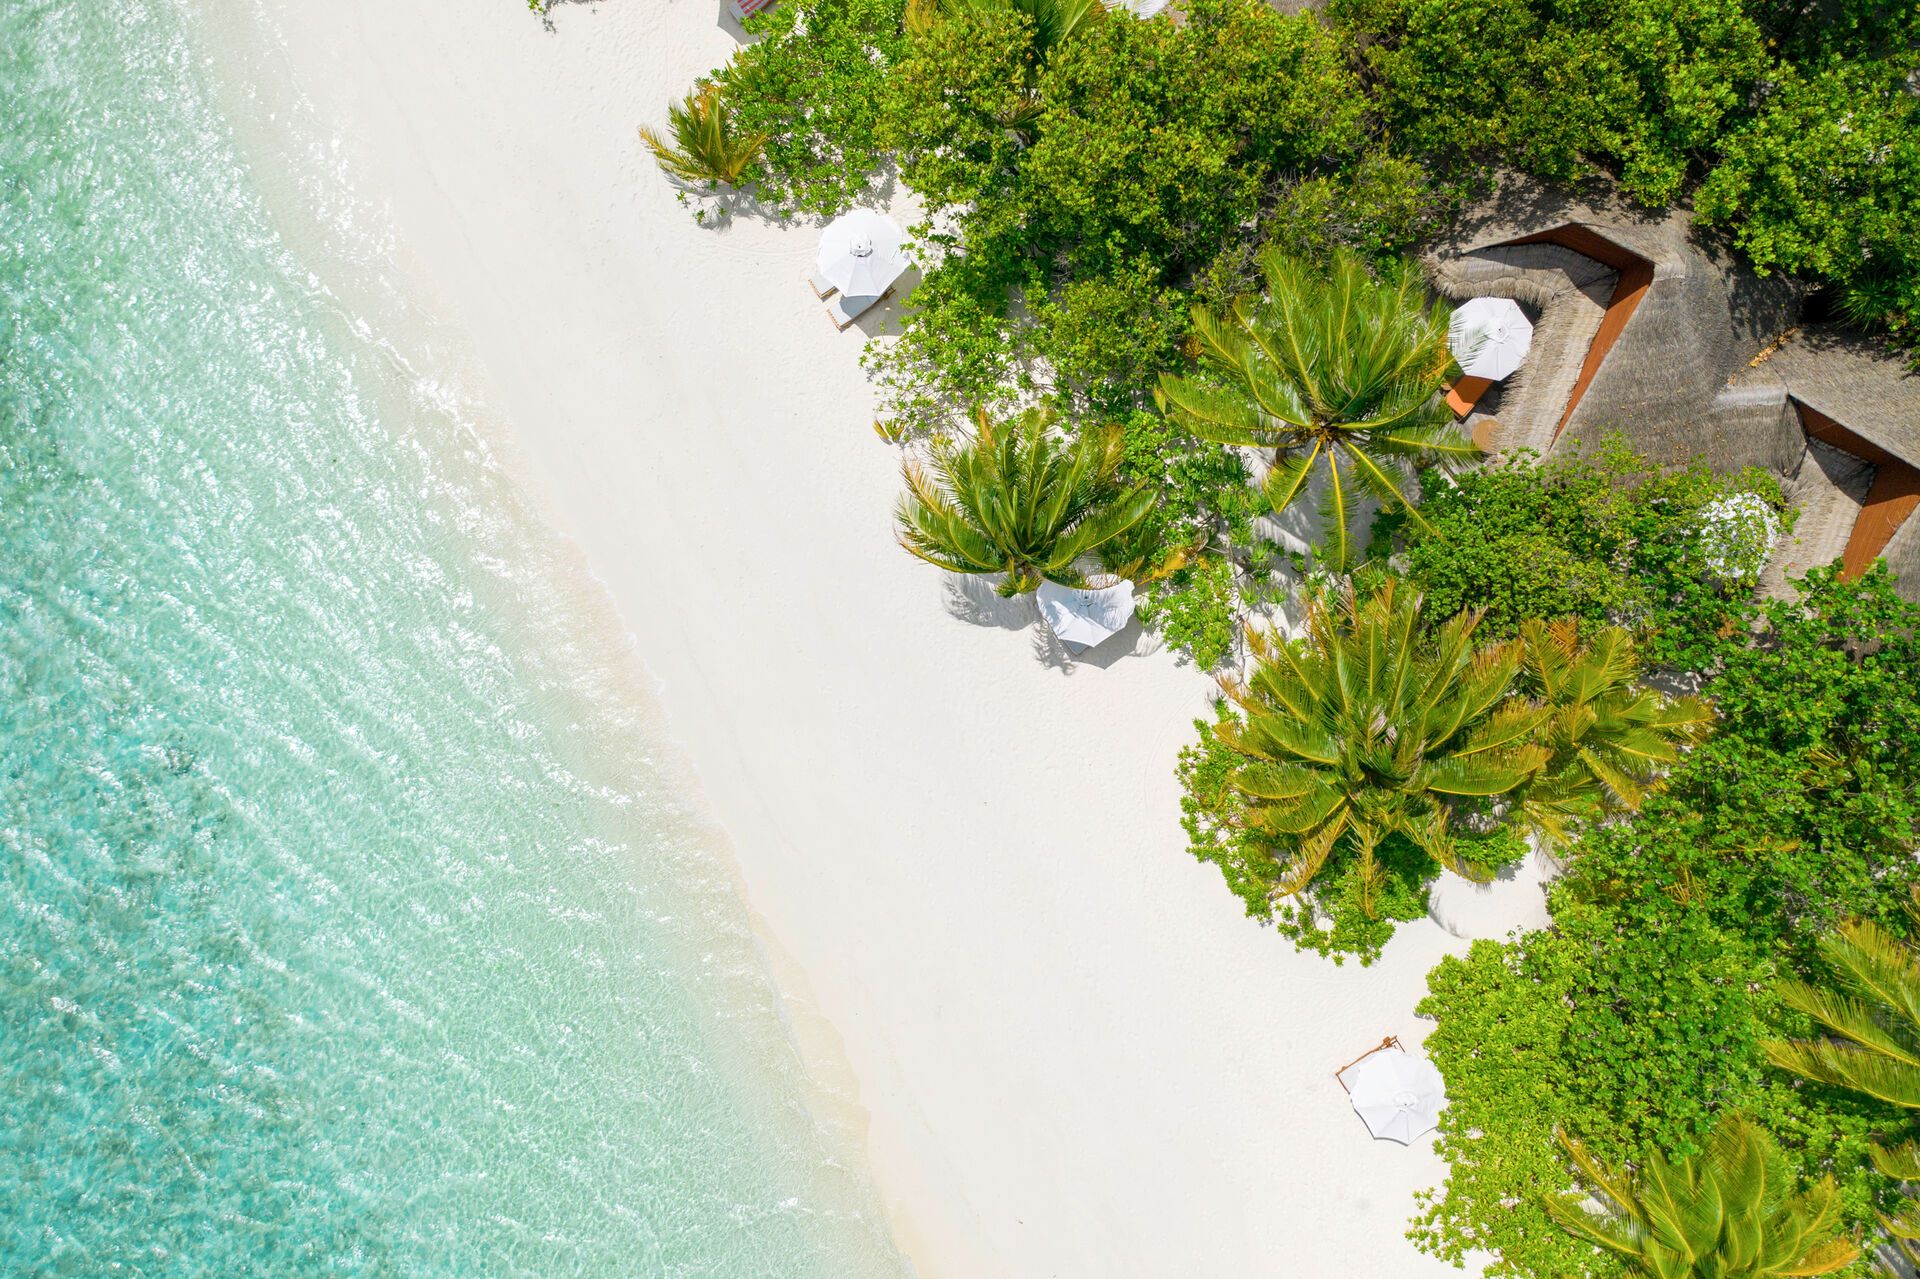 Maldives - Hotel Mirihi Island Resort 5*